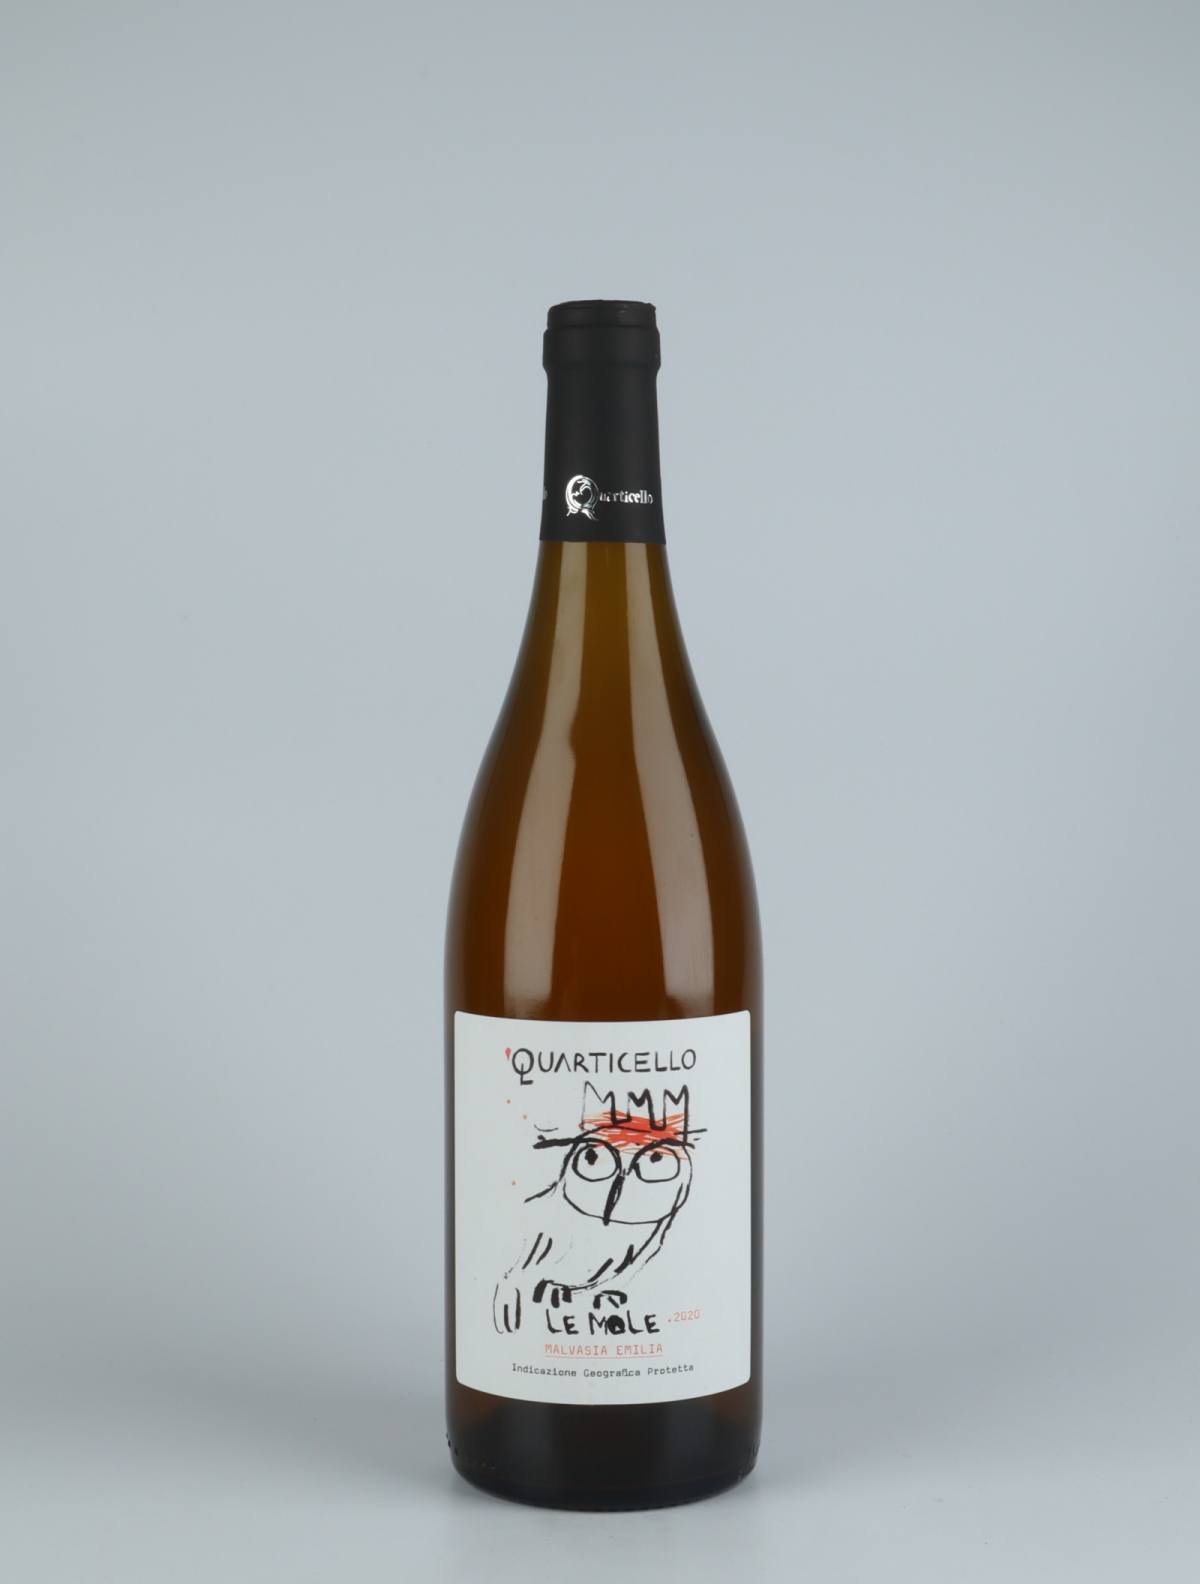 En flaske 2020 Le Mole Orange vin fra Quarticello, Emilia-Romagna i Italien